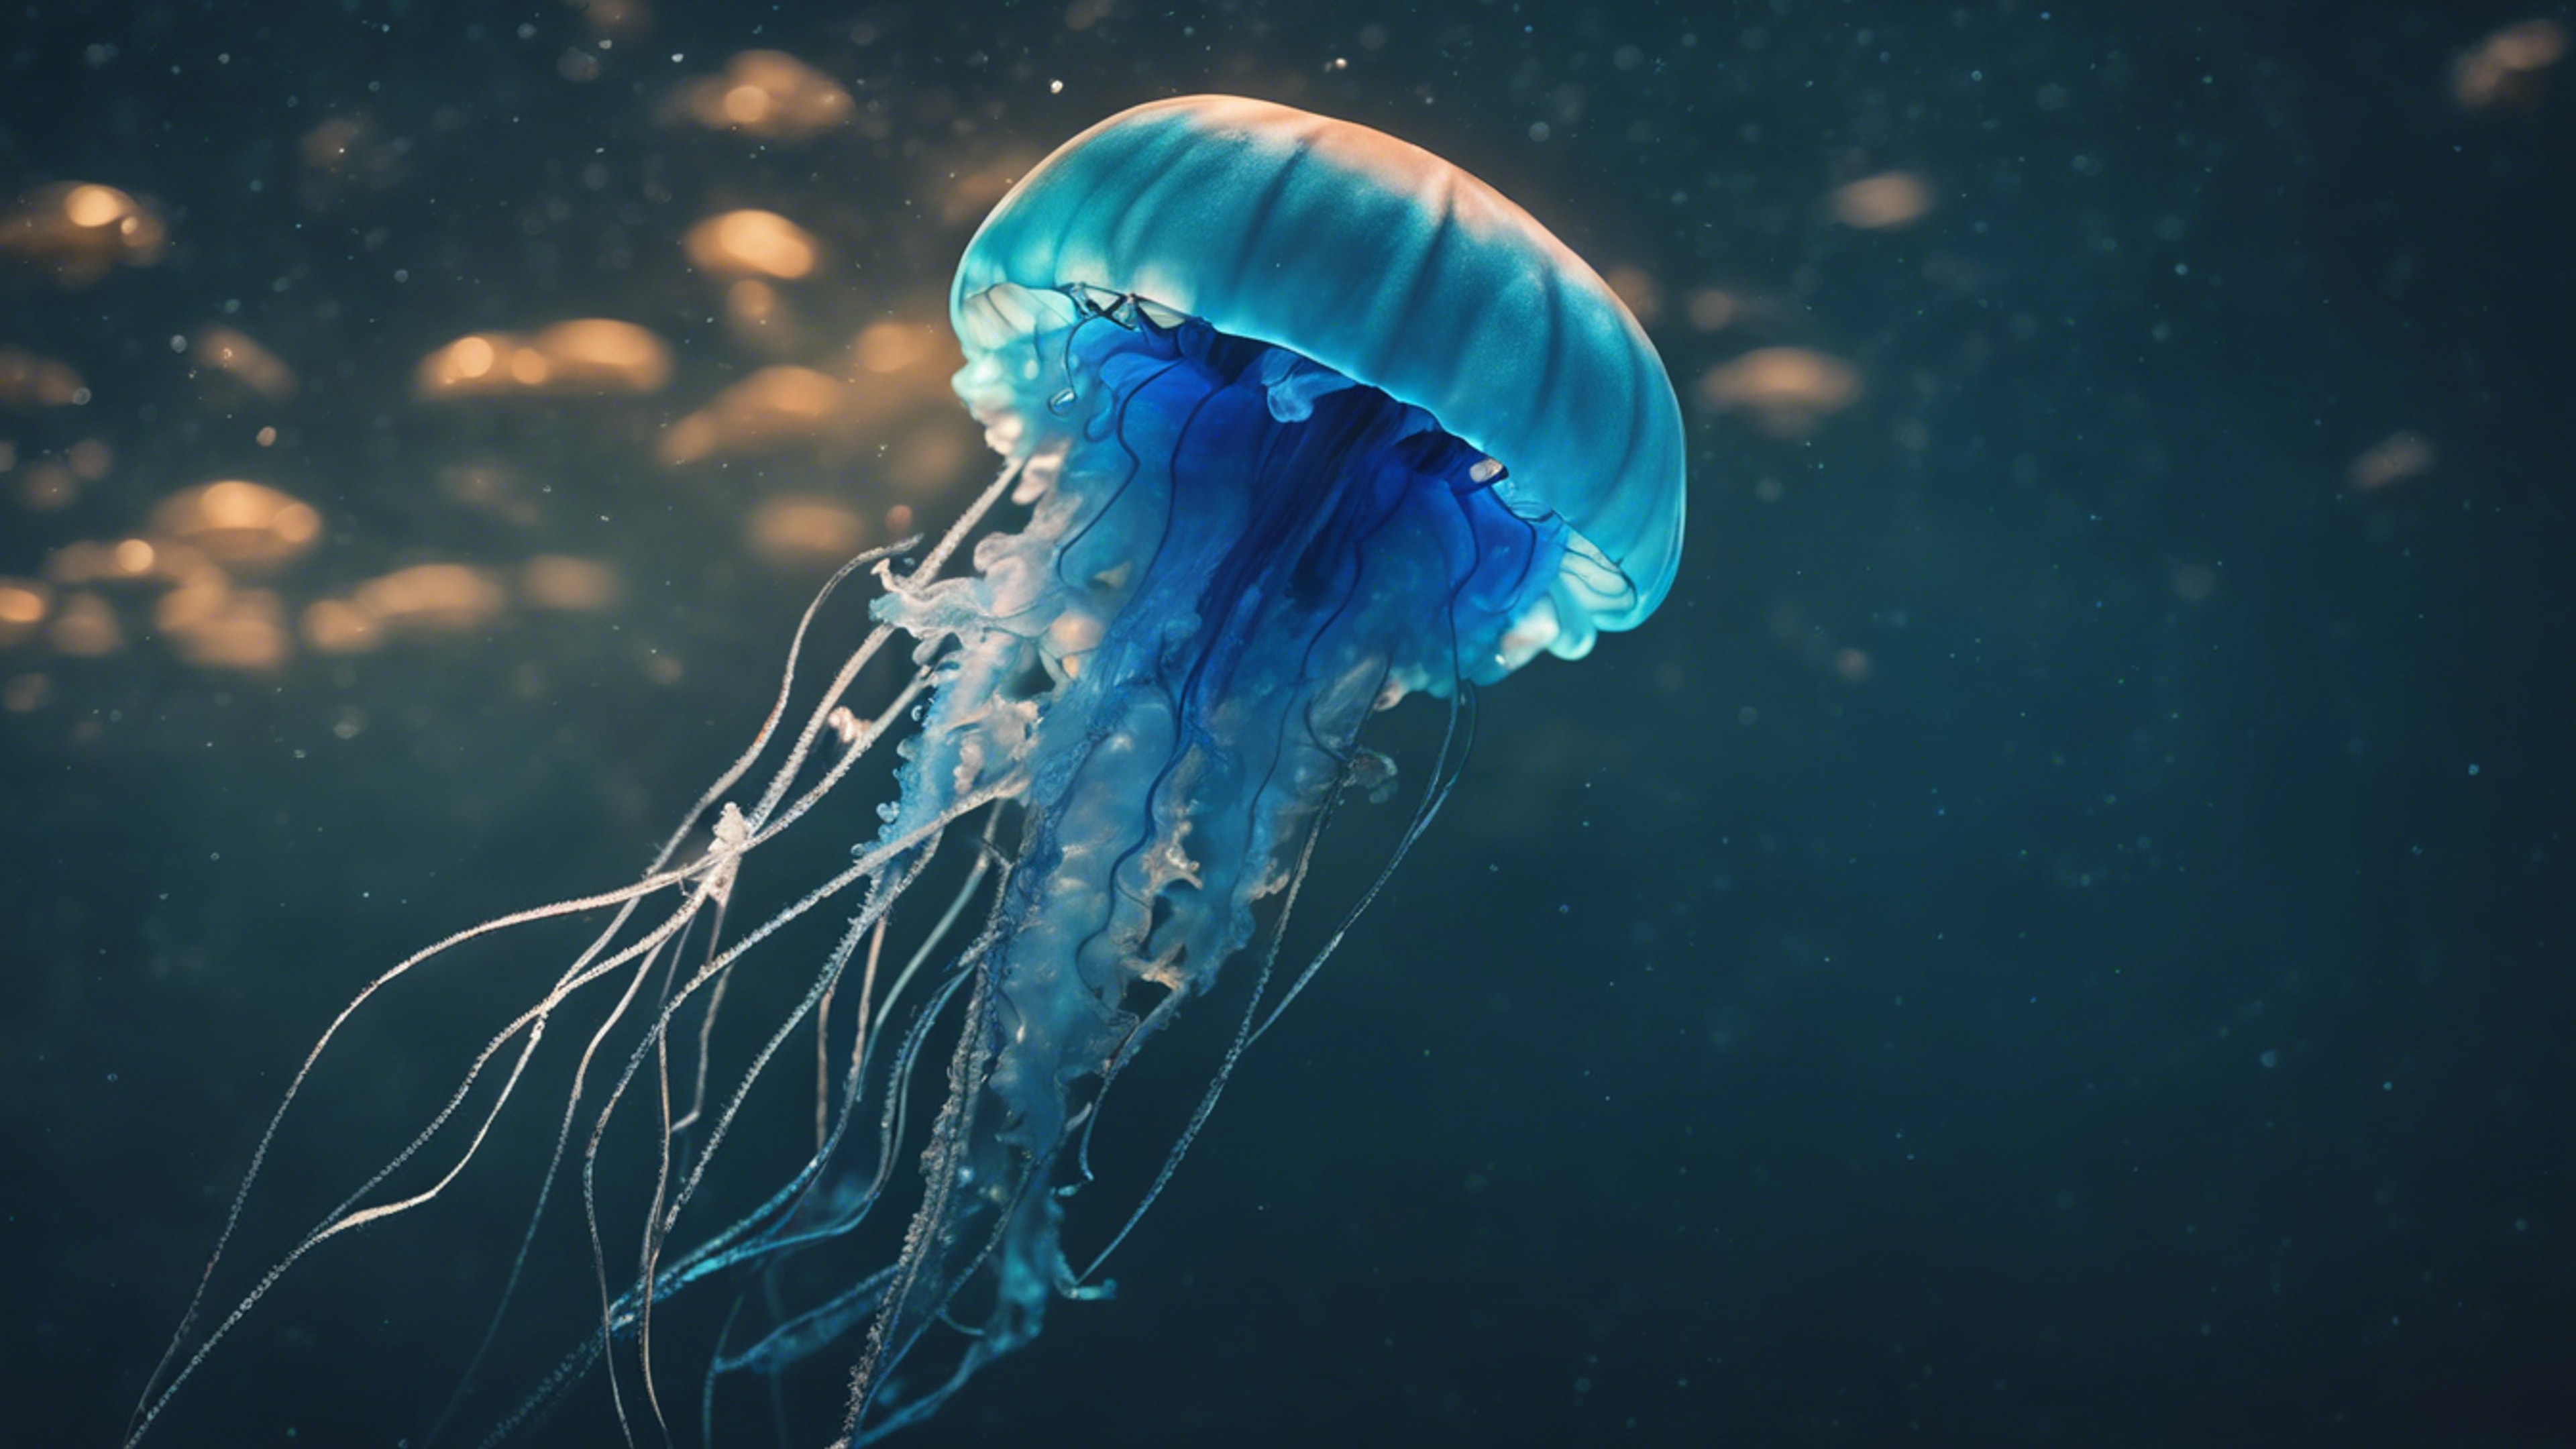 A neon blue jellyfish gracefully floating in the dark ocean depths.壁紙[de52a1967abe4ca3a1c8]